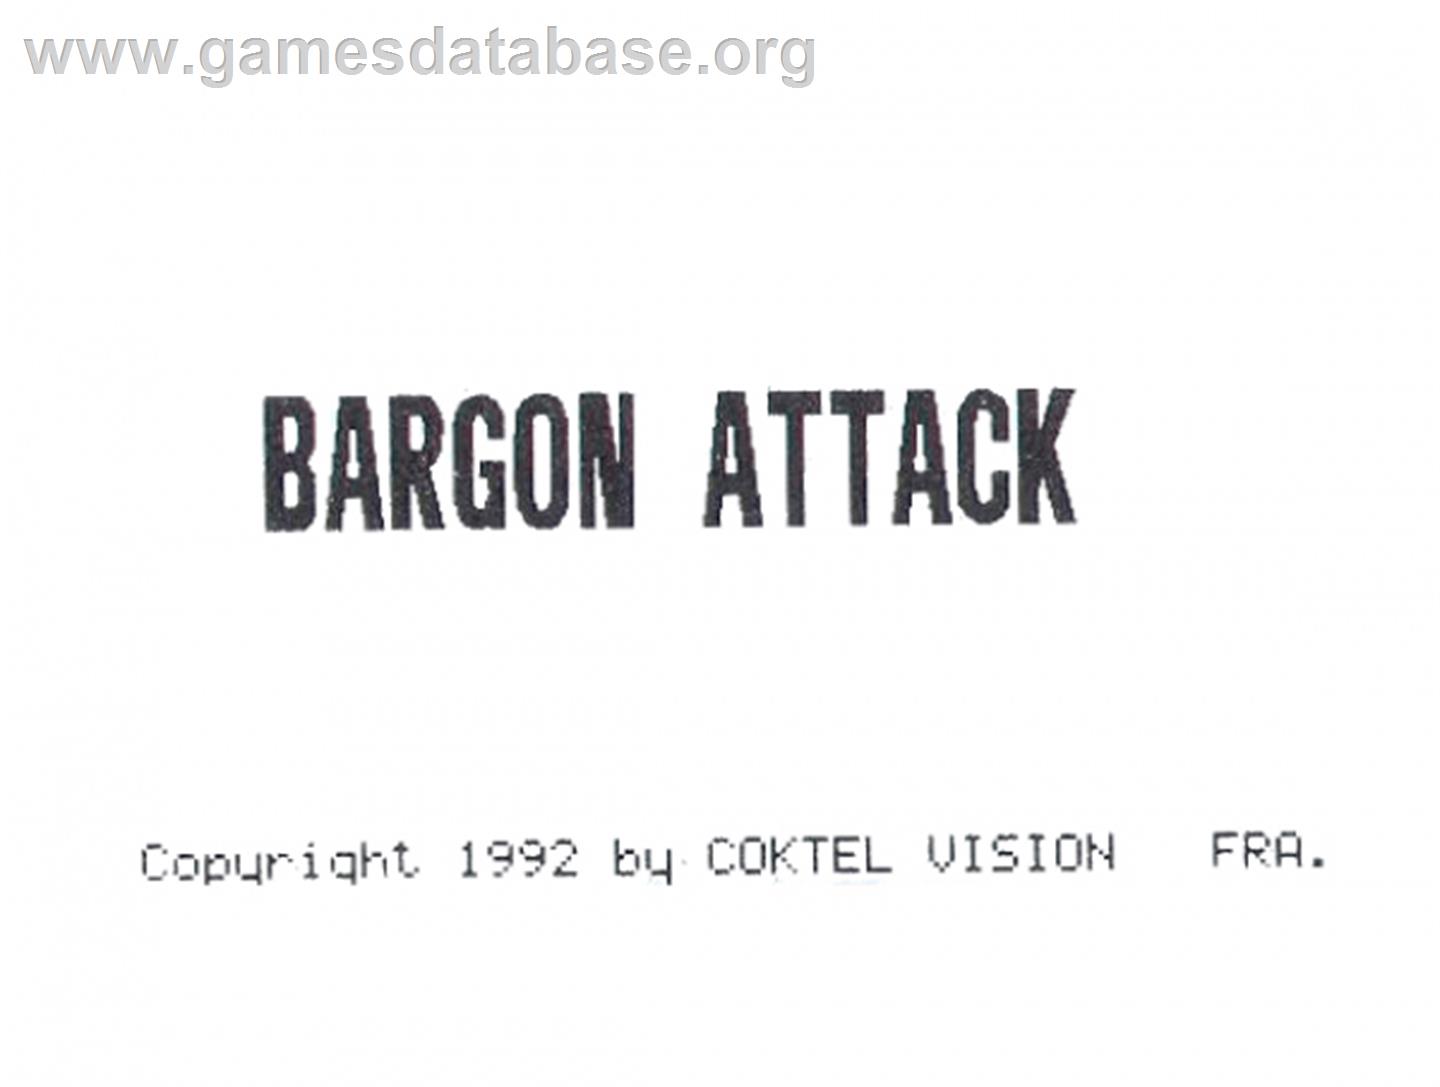 Bargon Attack - Commodore Amiga - Artwork - Cartridge Top